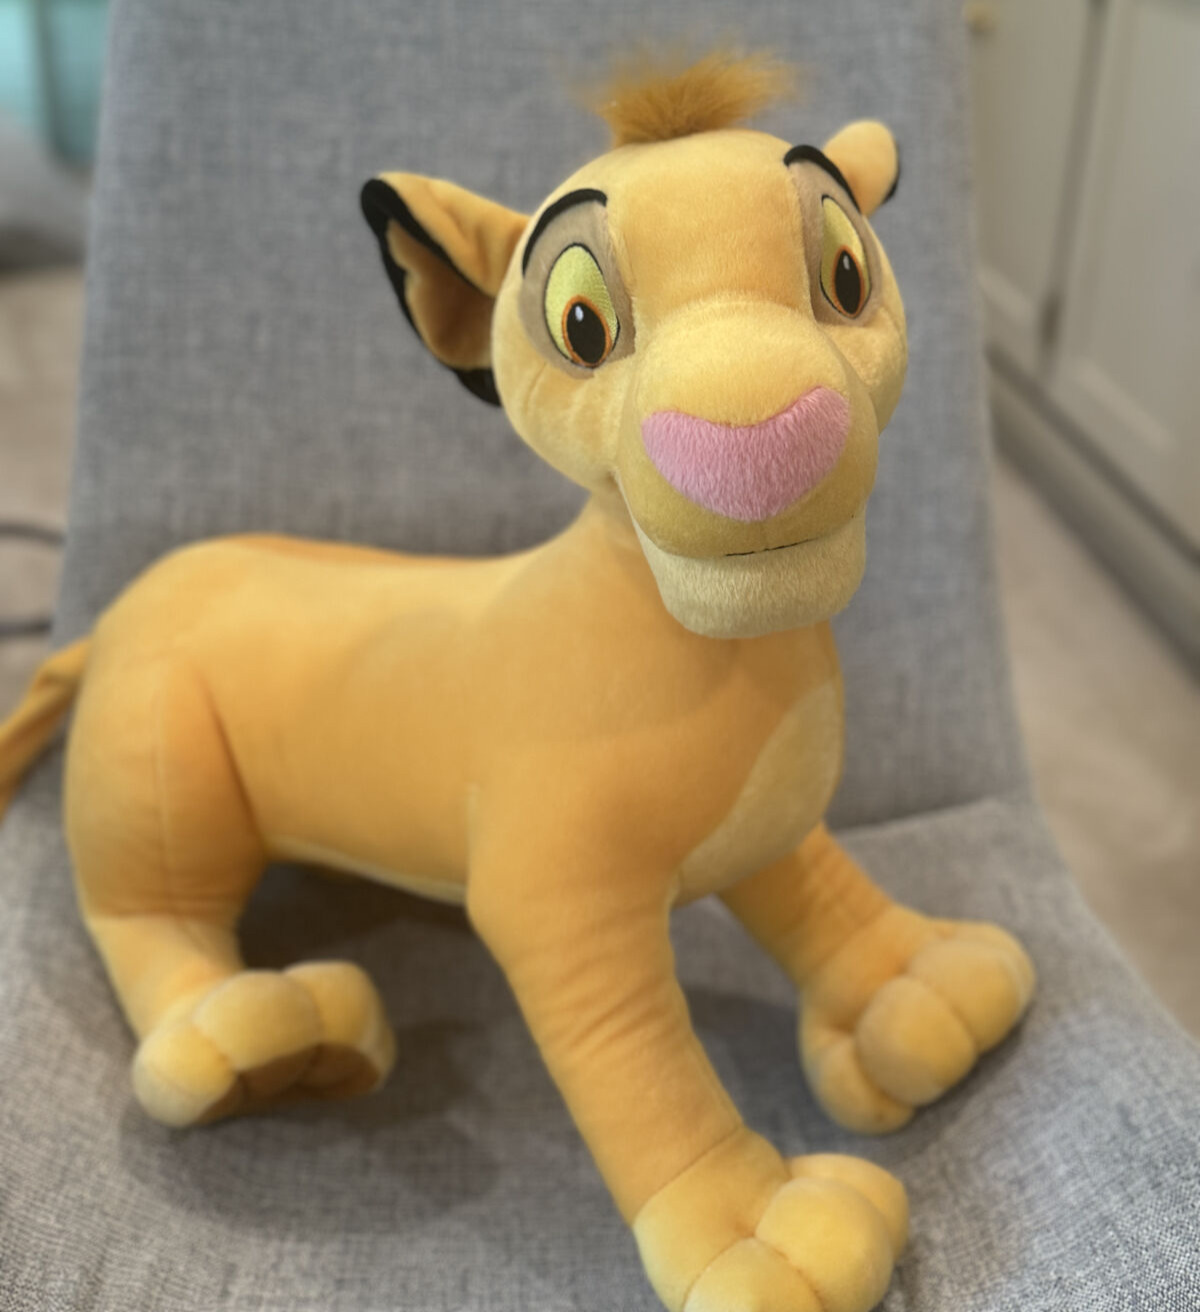 Disney The Lion King Jumbo Simba Plush Stuffed Animal 18x16x8 Hasbro 2002 Toy